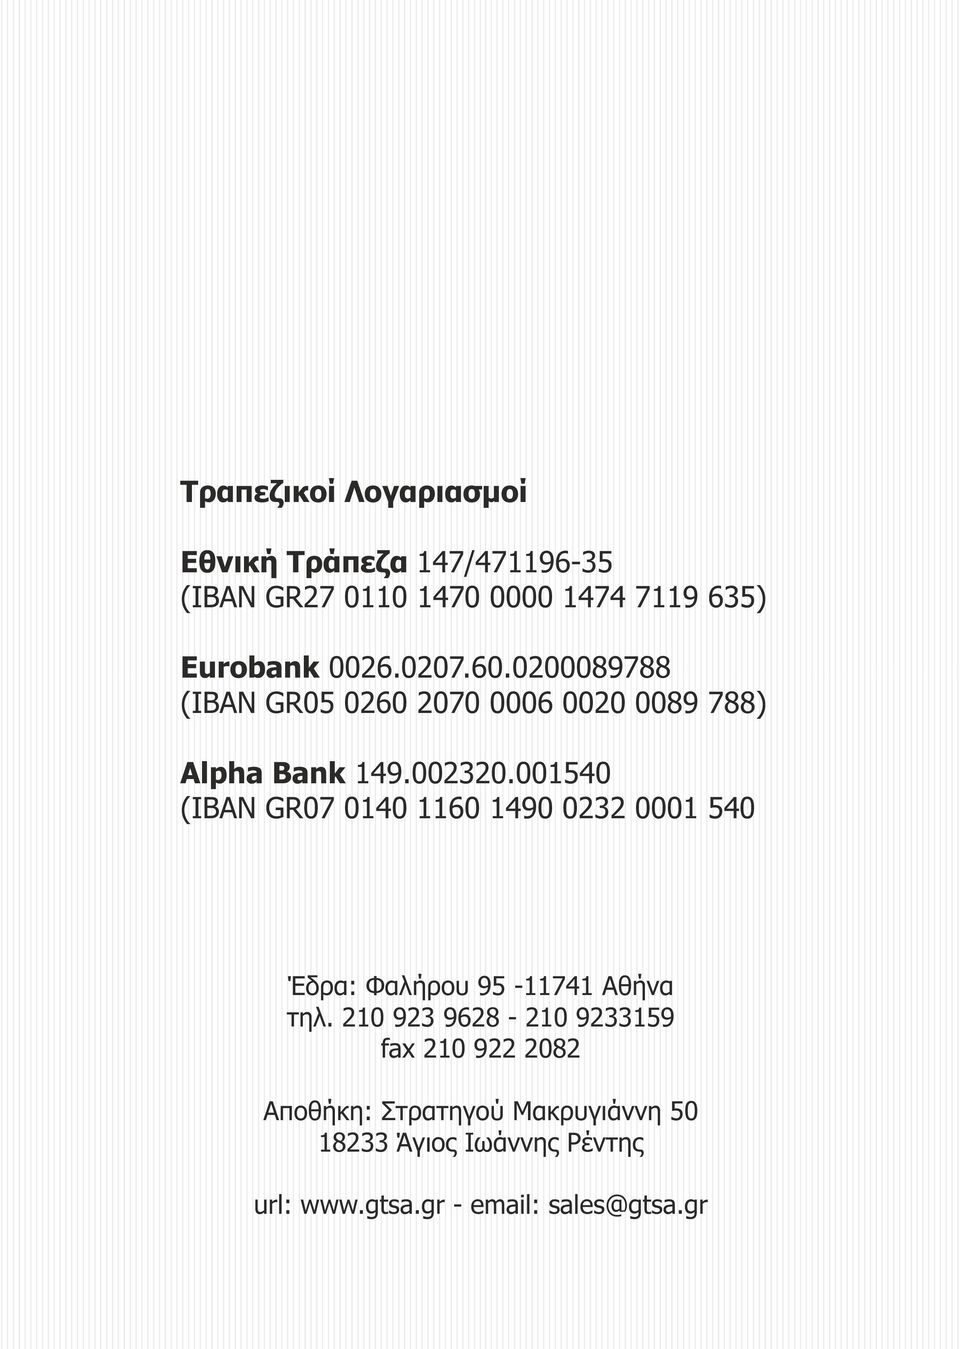 001540 (IBAN GR07 0140 1160 1490 0232 0001 540 Έδρα: Φαλήρου 95-11741 Αθήνα τηλ.